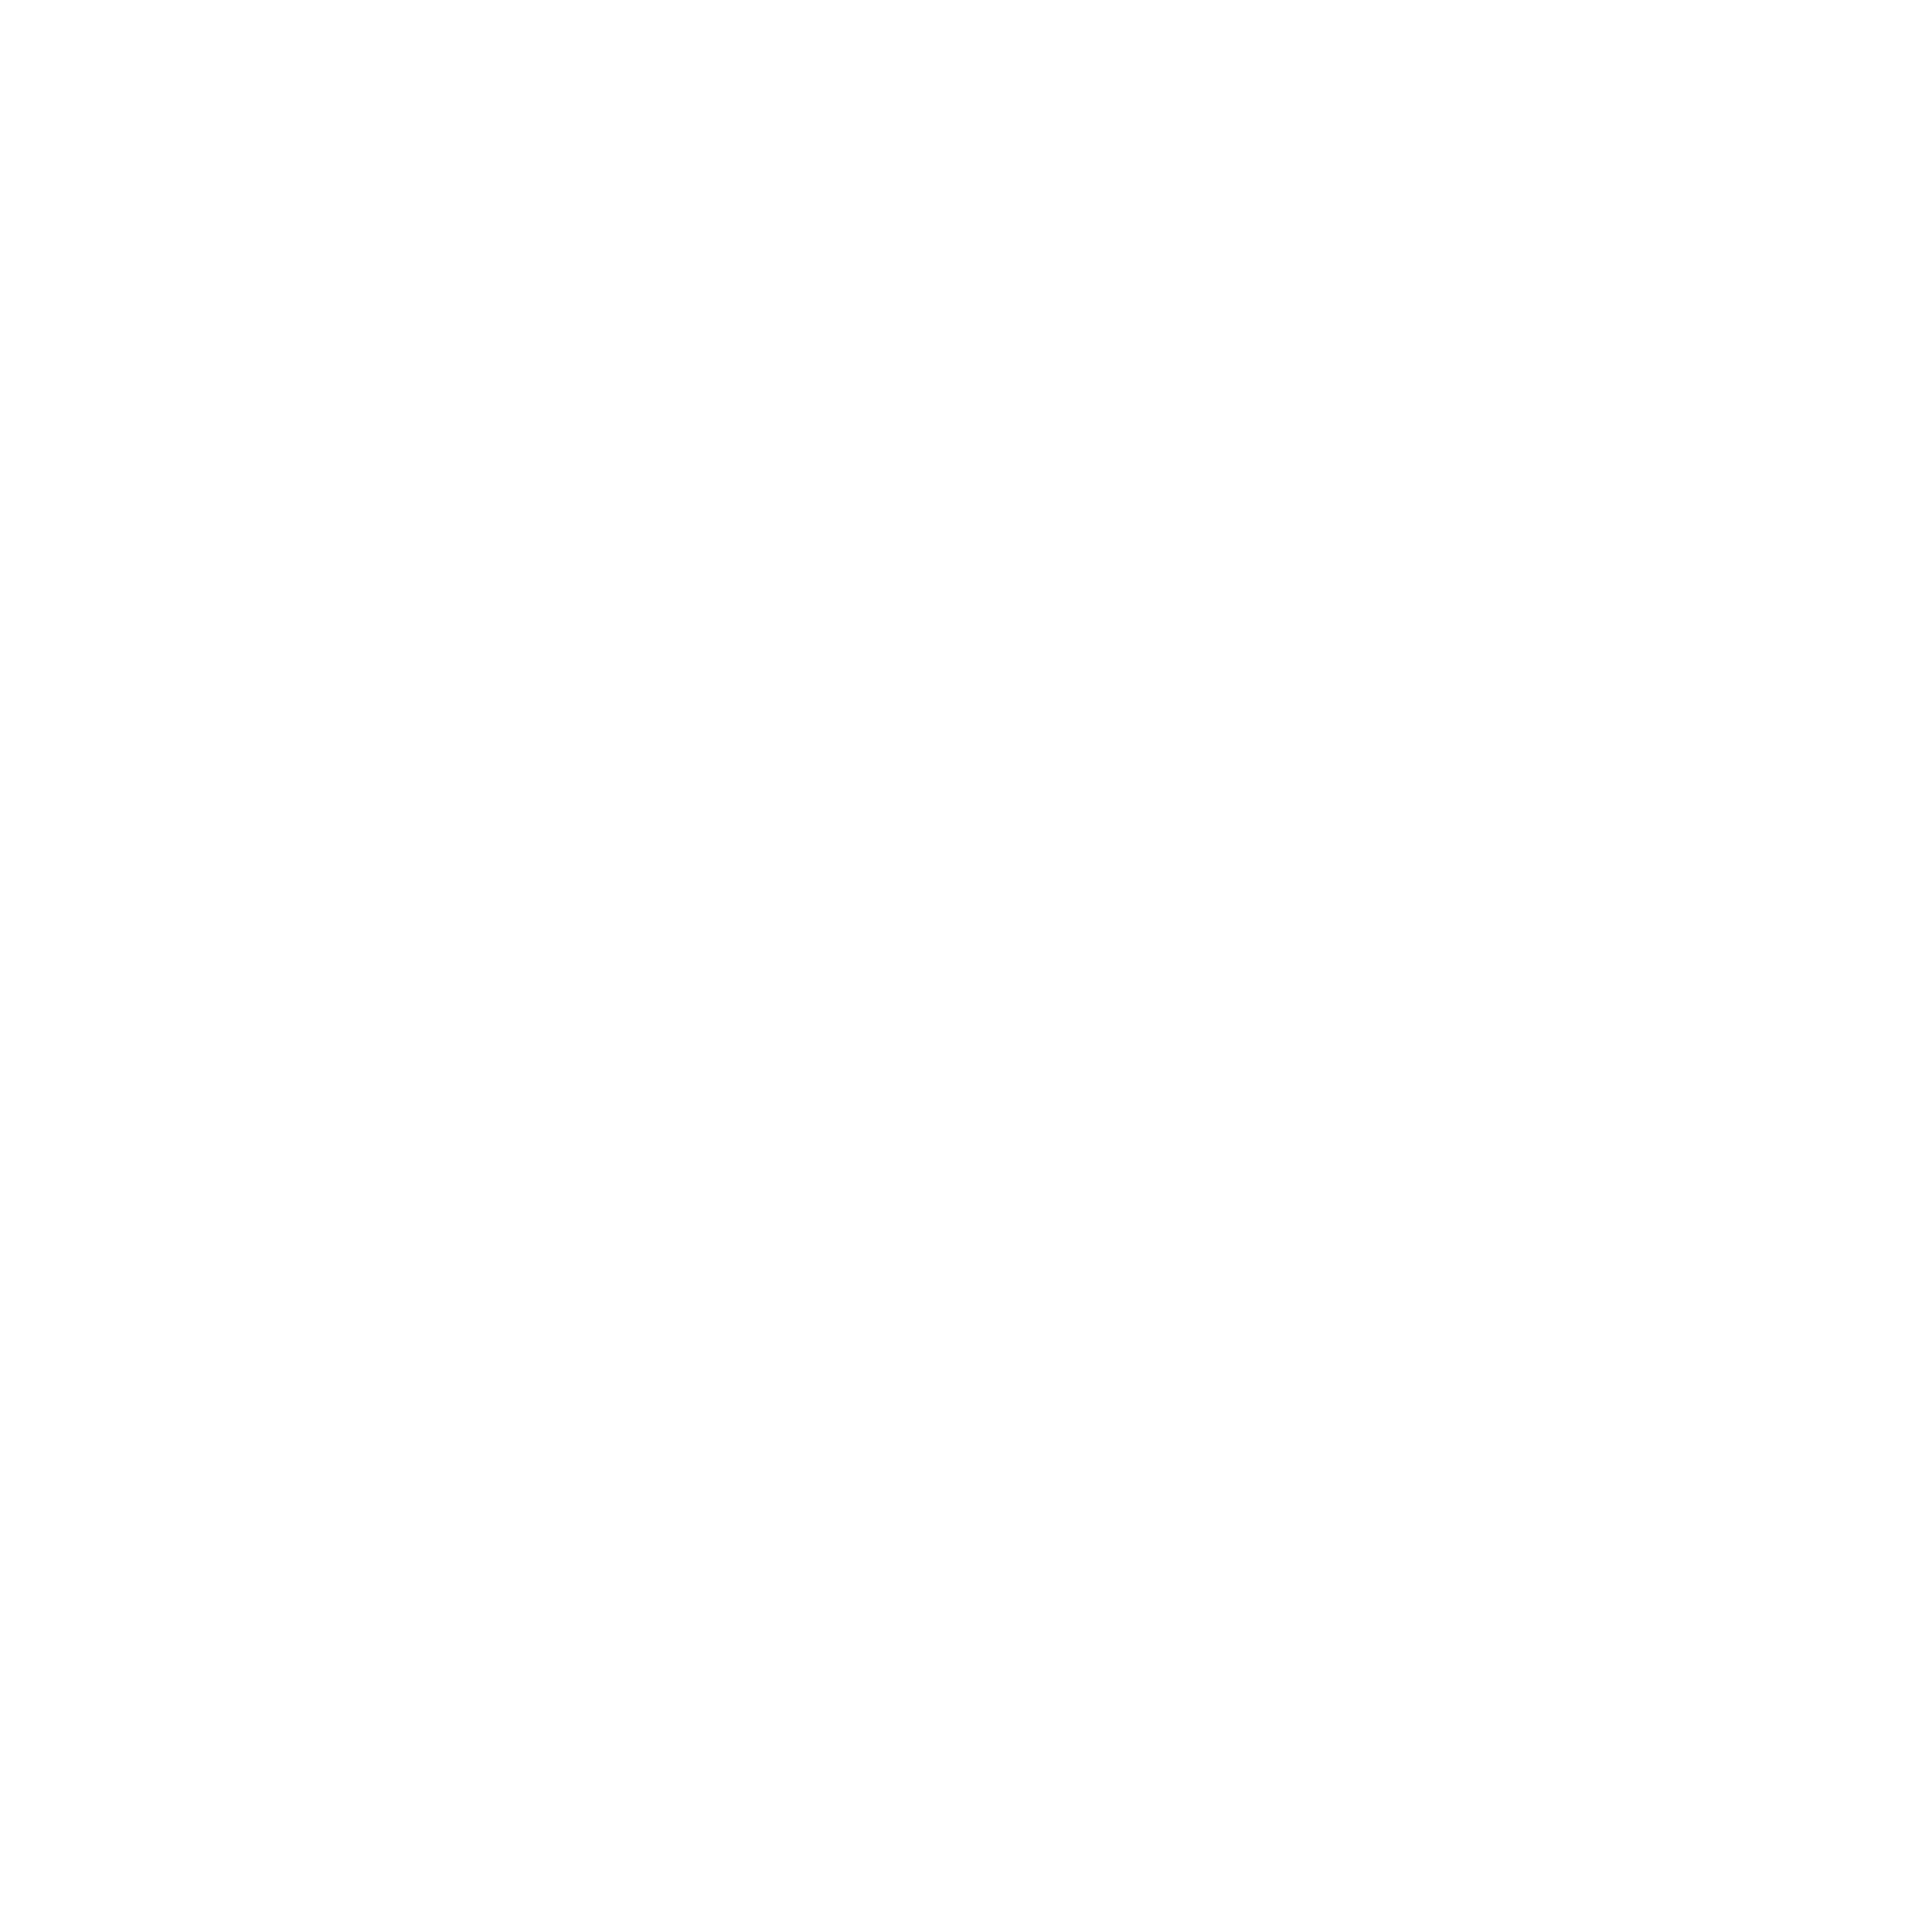 White gears icon